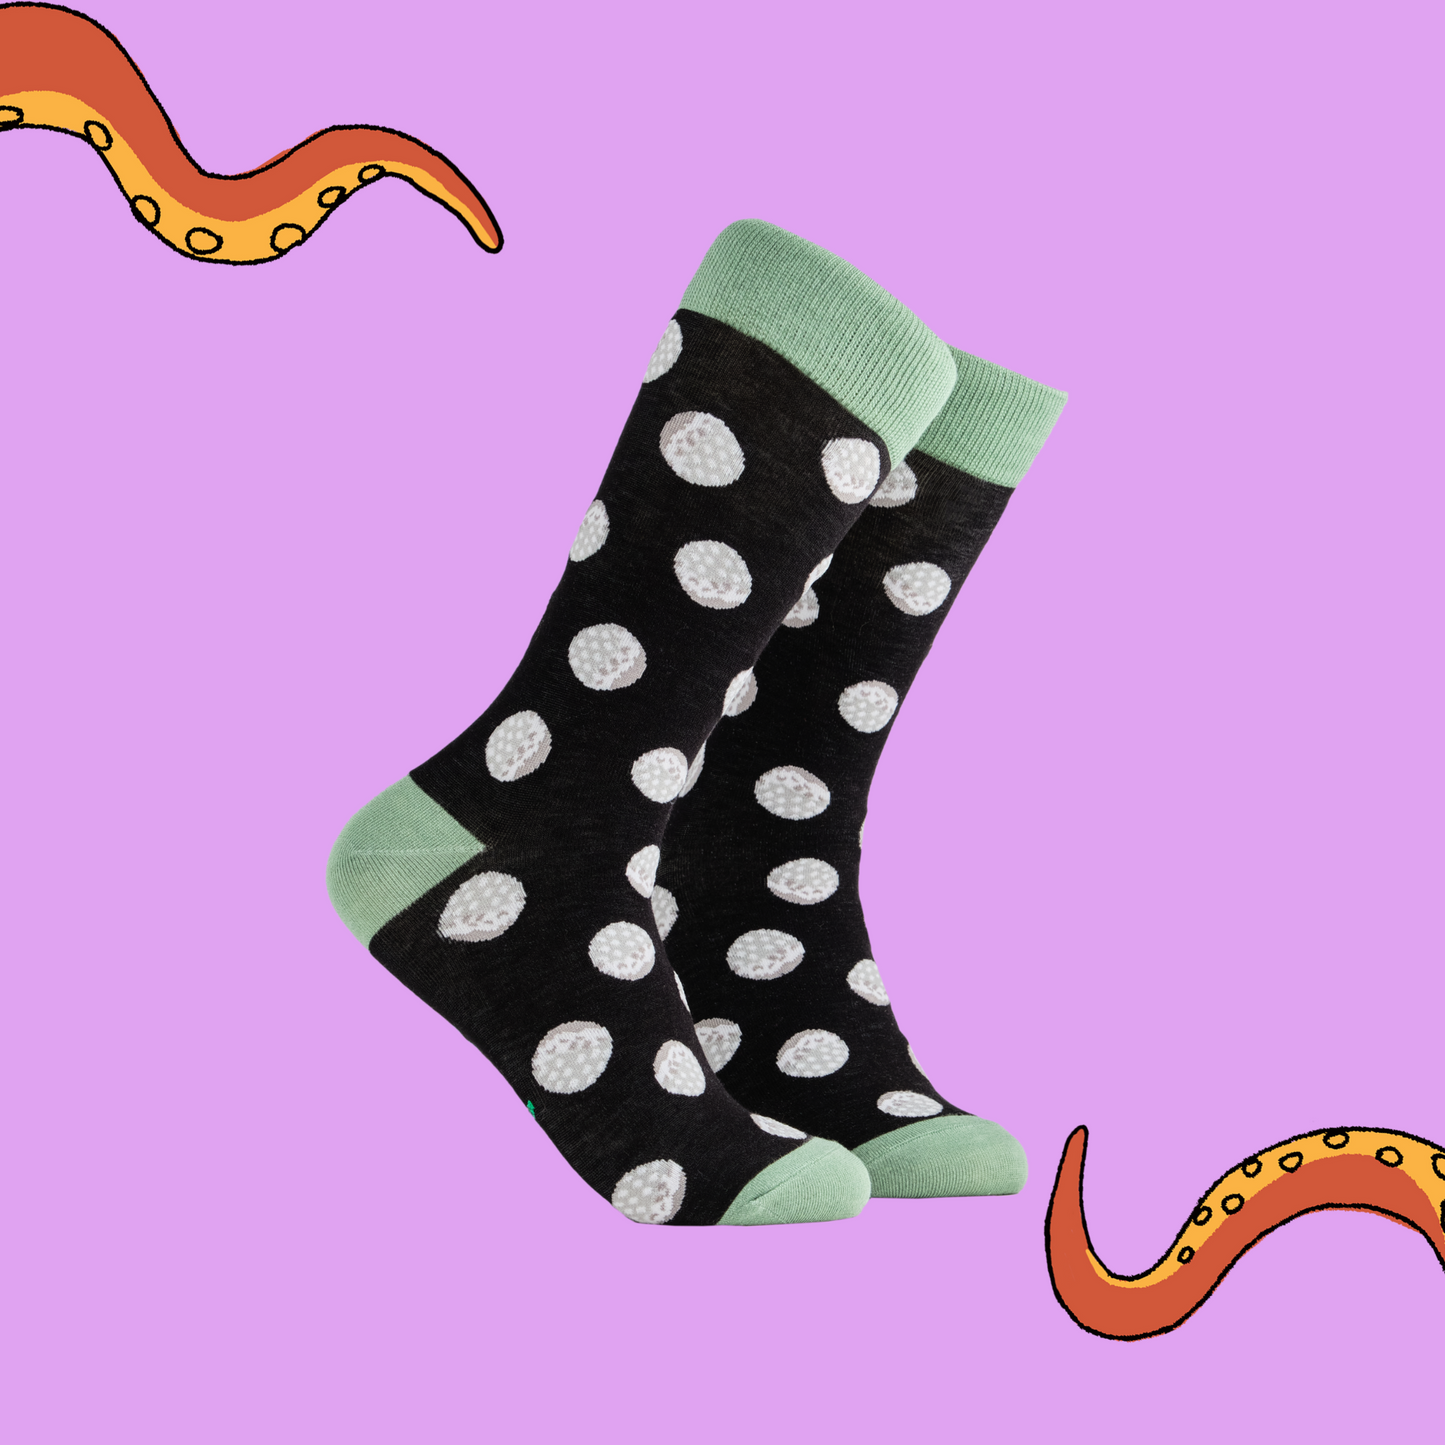 A pair of socks depicting golf balls. Black legs, light green cuff, heel and toe.